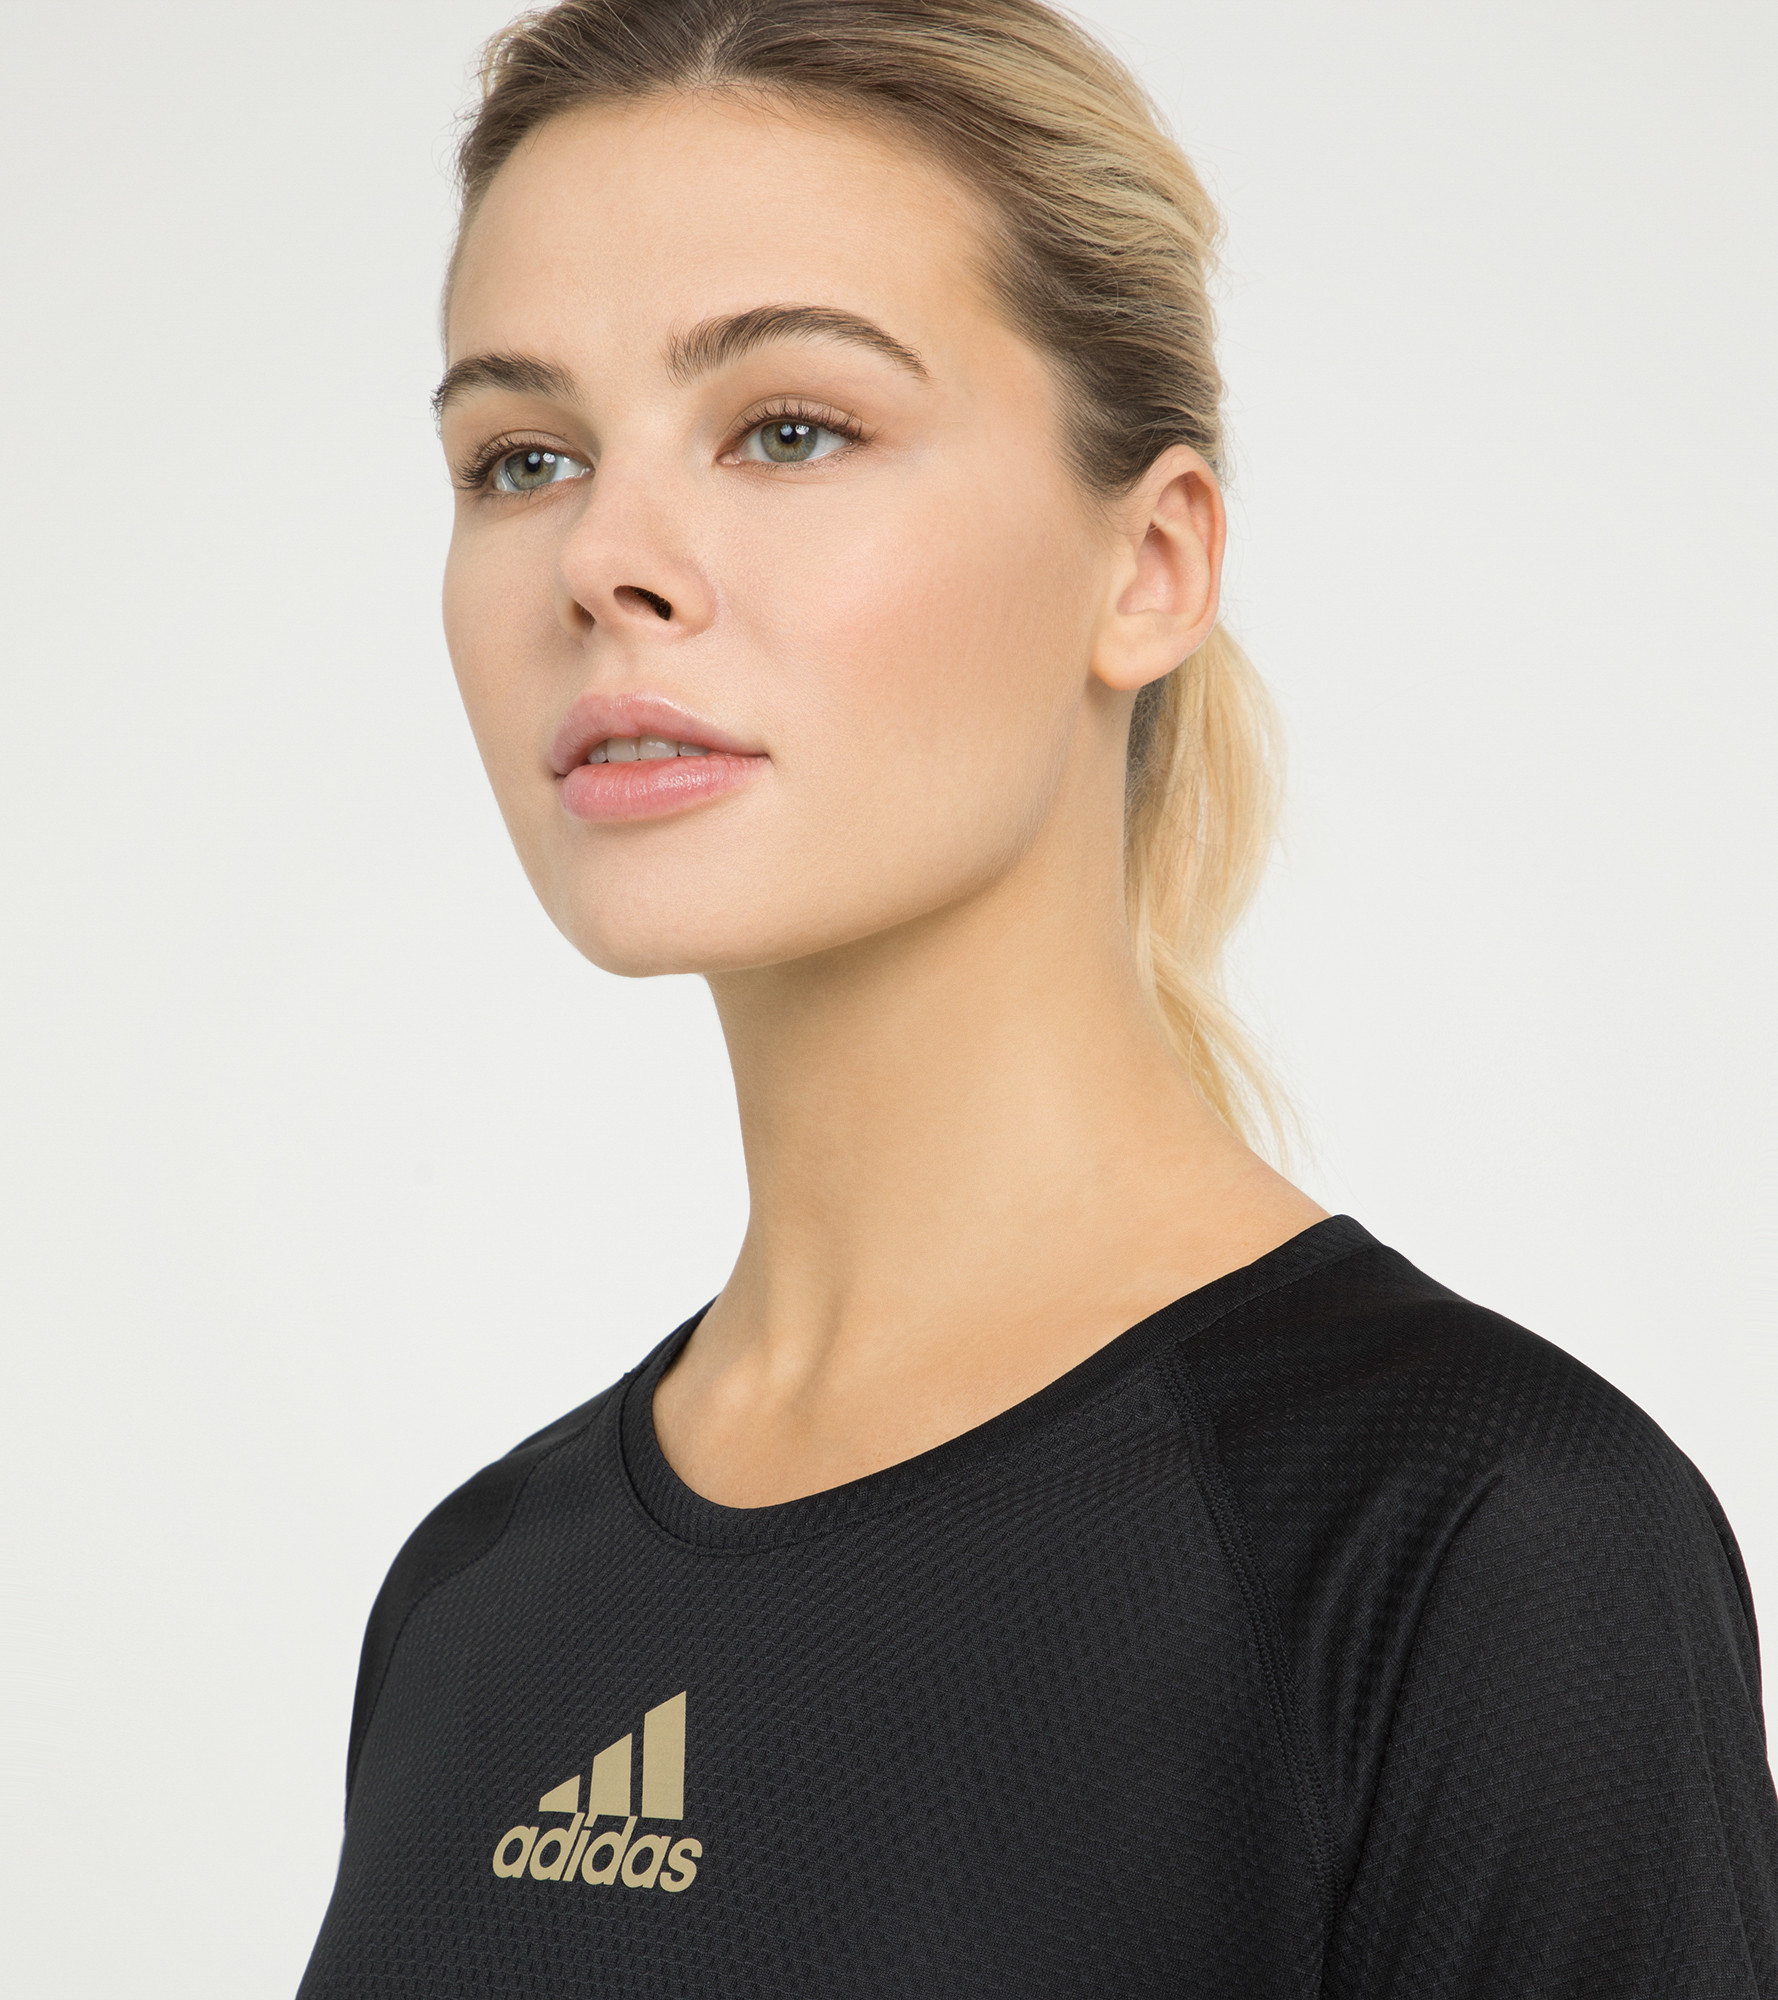 Футболка жіноча Adidas Unlimited